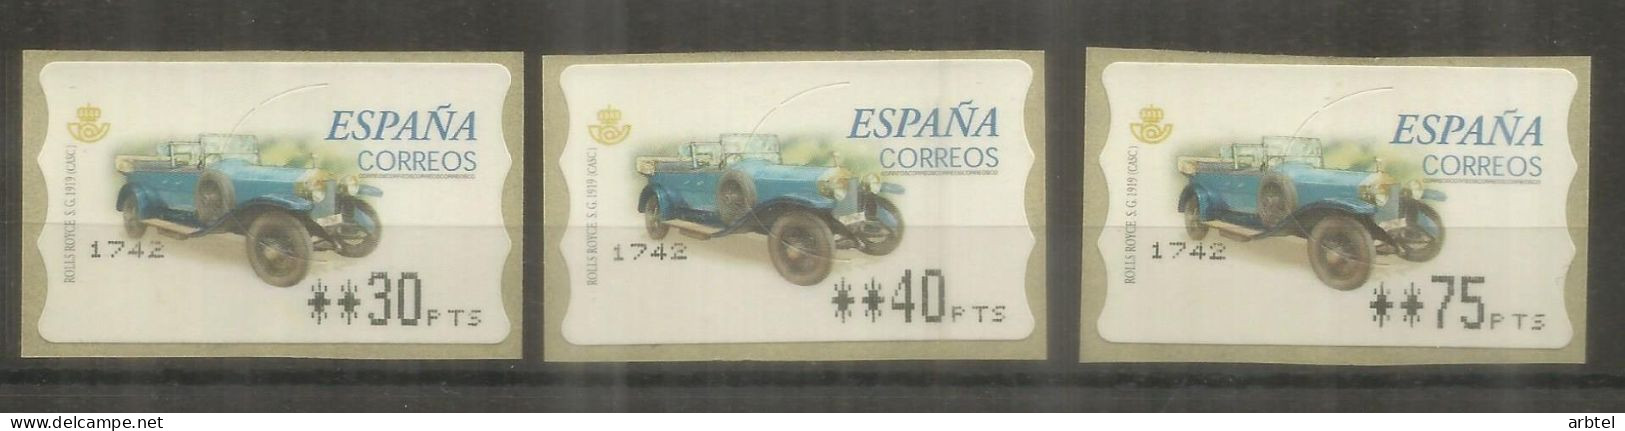 ESPAÑA ATM AUTOMOVIL CAR ROLLS ROYCE - Coches